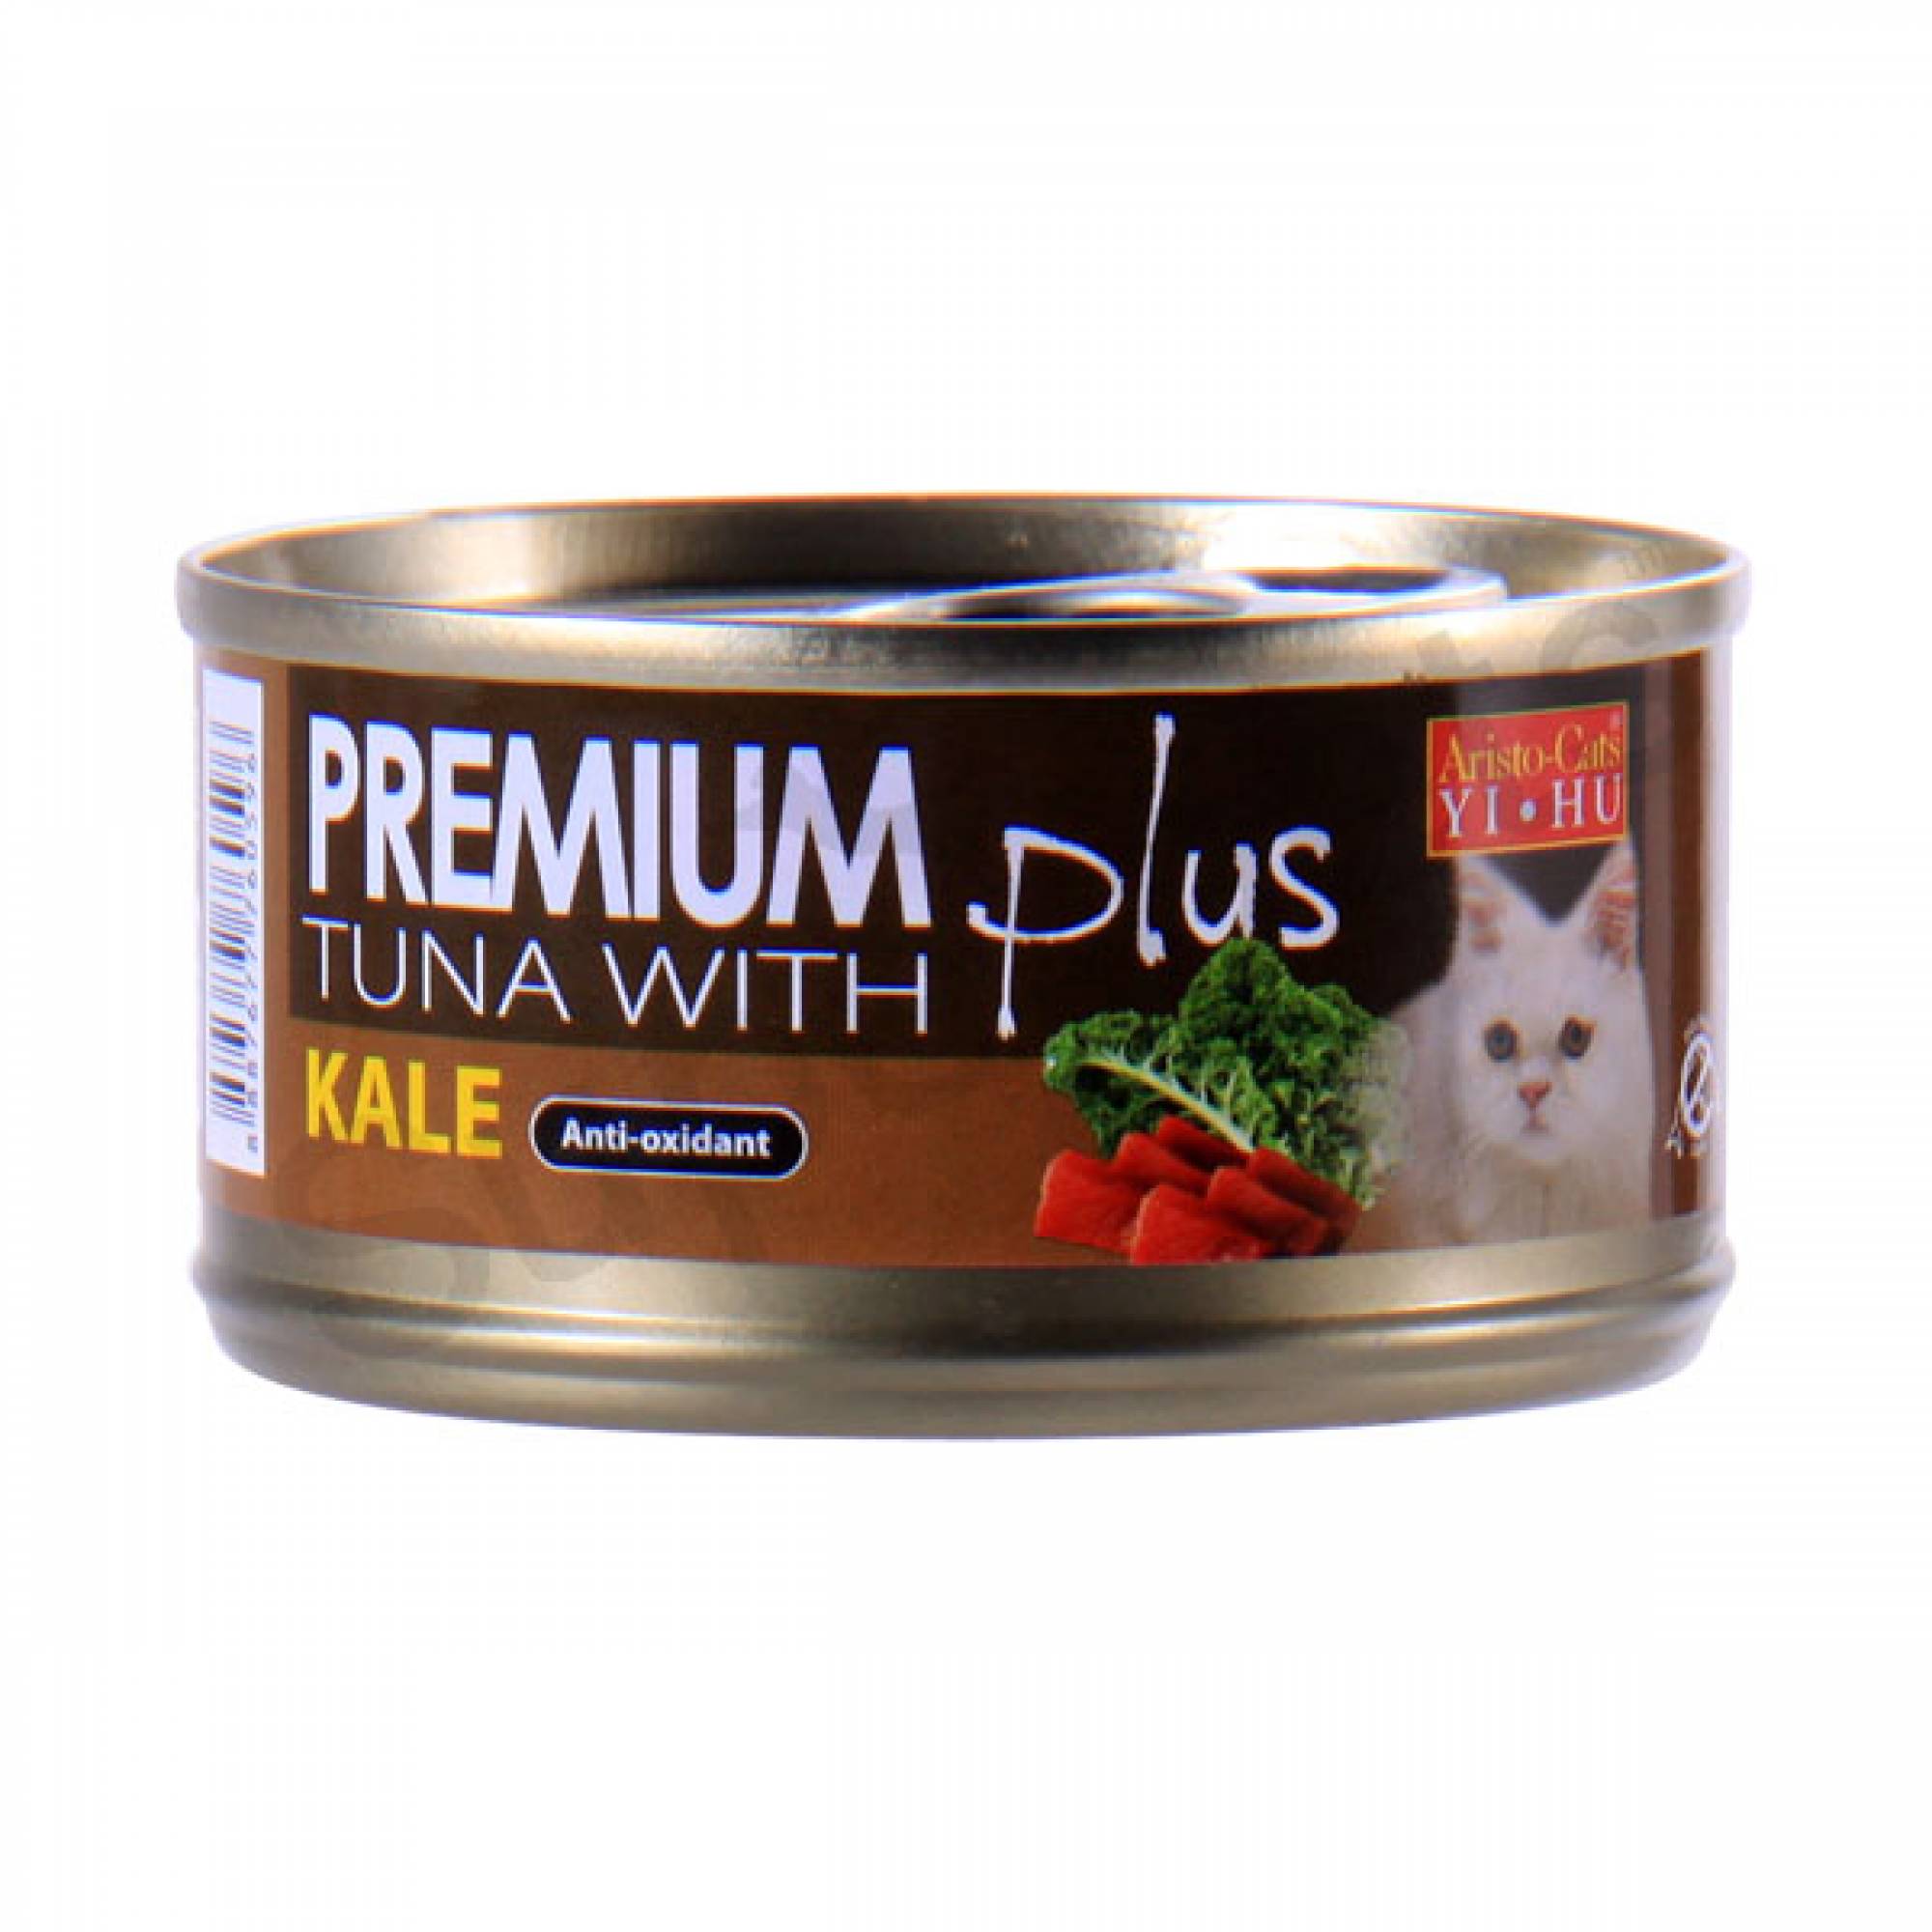 Aristo-Cats - Premium Plus - Tuna with Kale 80g